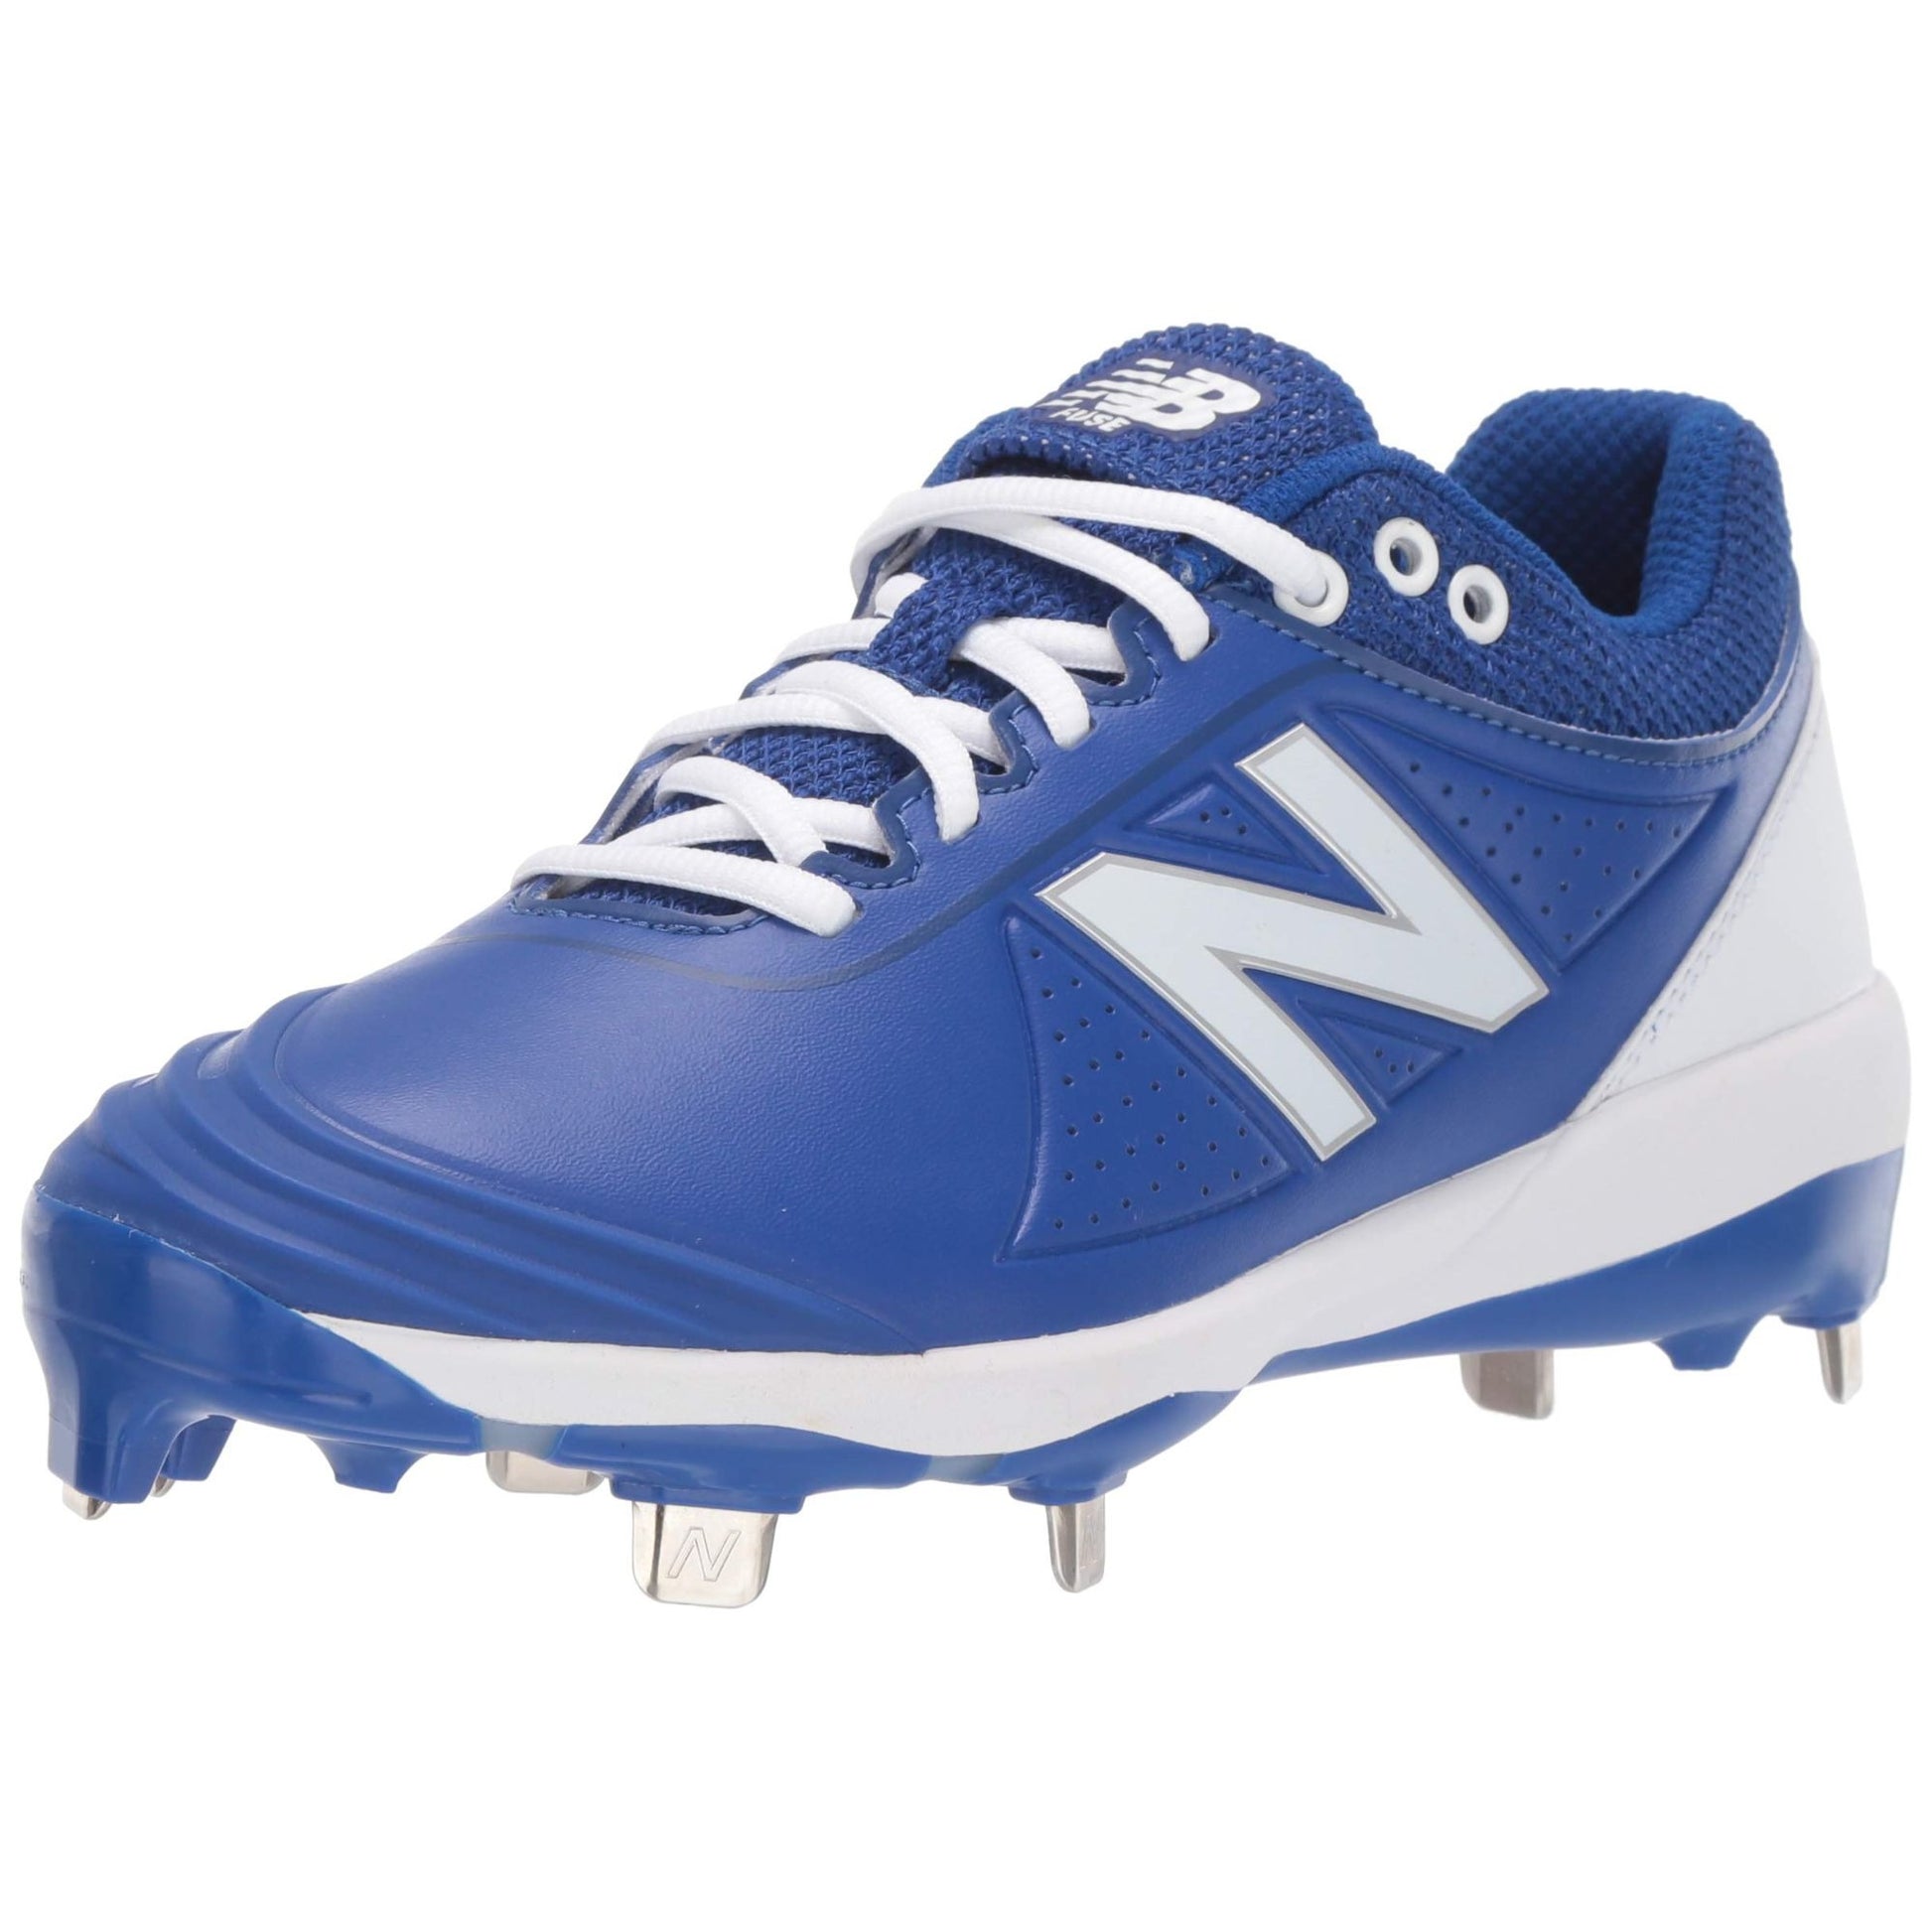 New Balance Women's Fuse V2 Metal Softball Shoe, Royal Blue and White Size 5